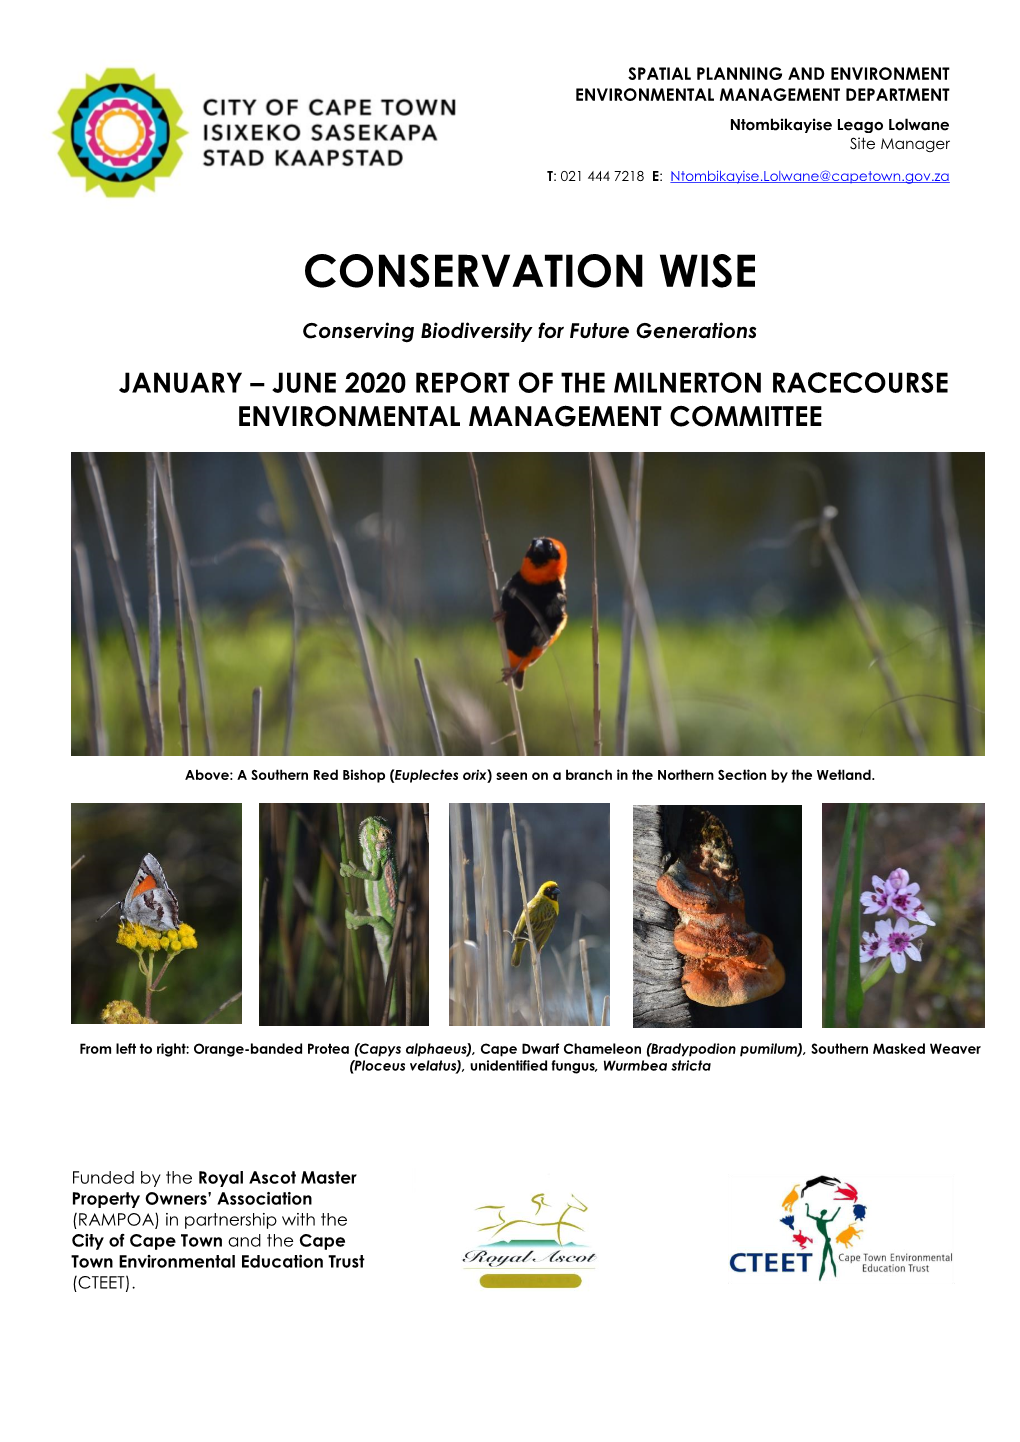 Conservation Wise Report Milnerton Racecourse January – June 2020